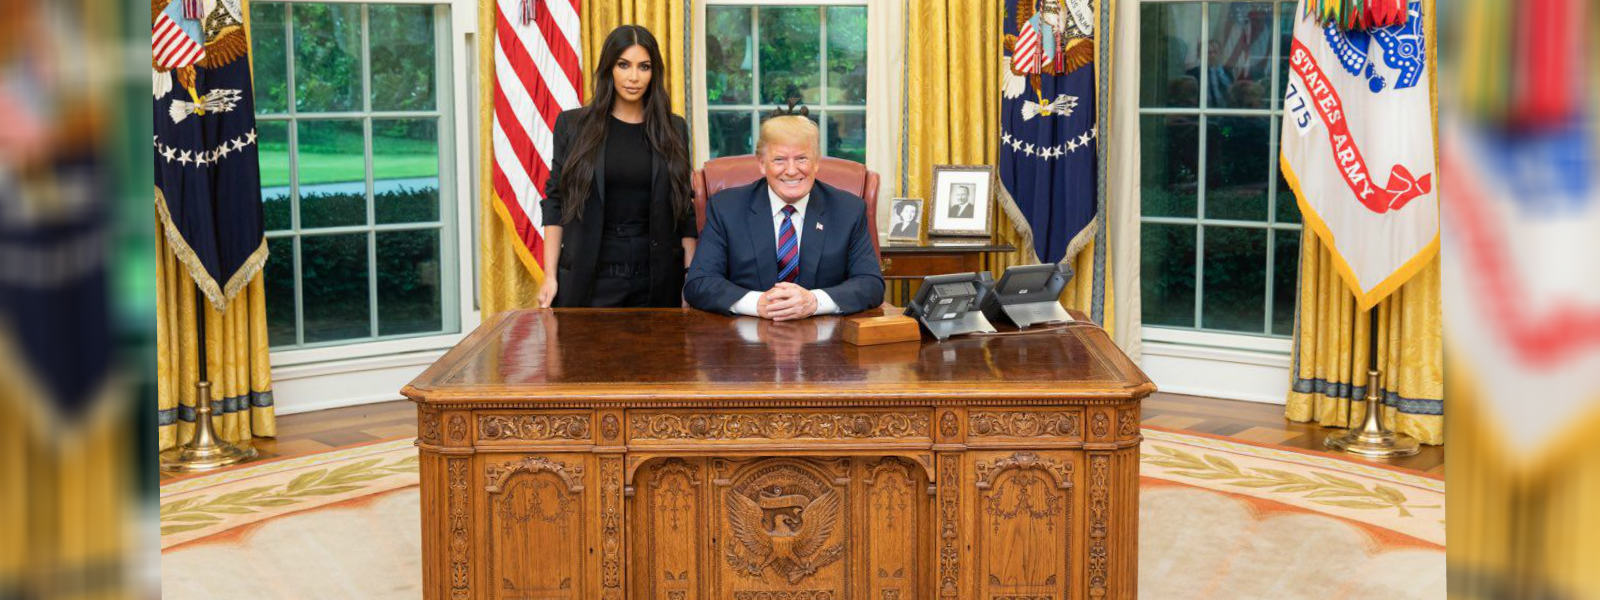 Kim Kardashian meets Donald Trump